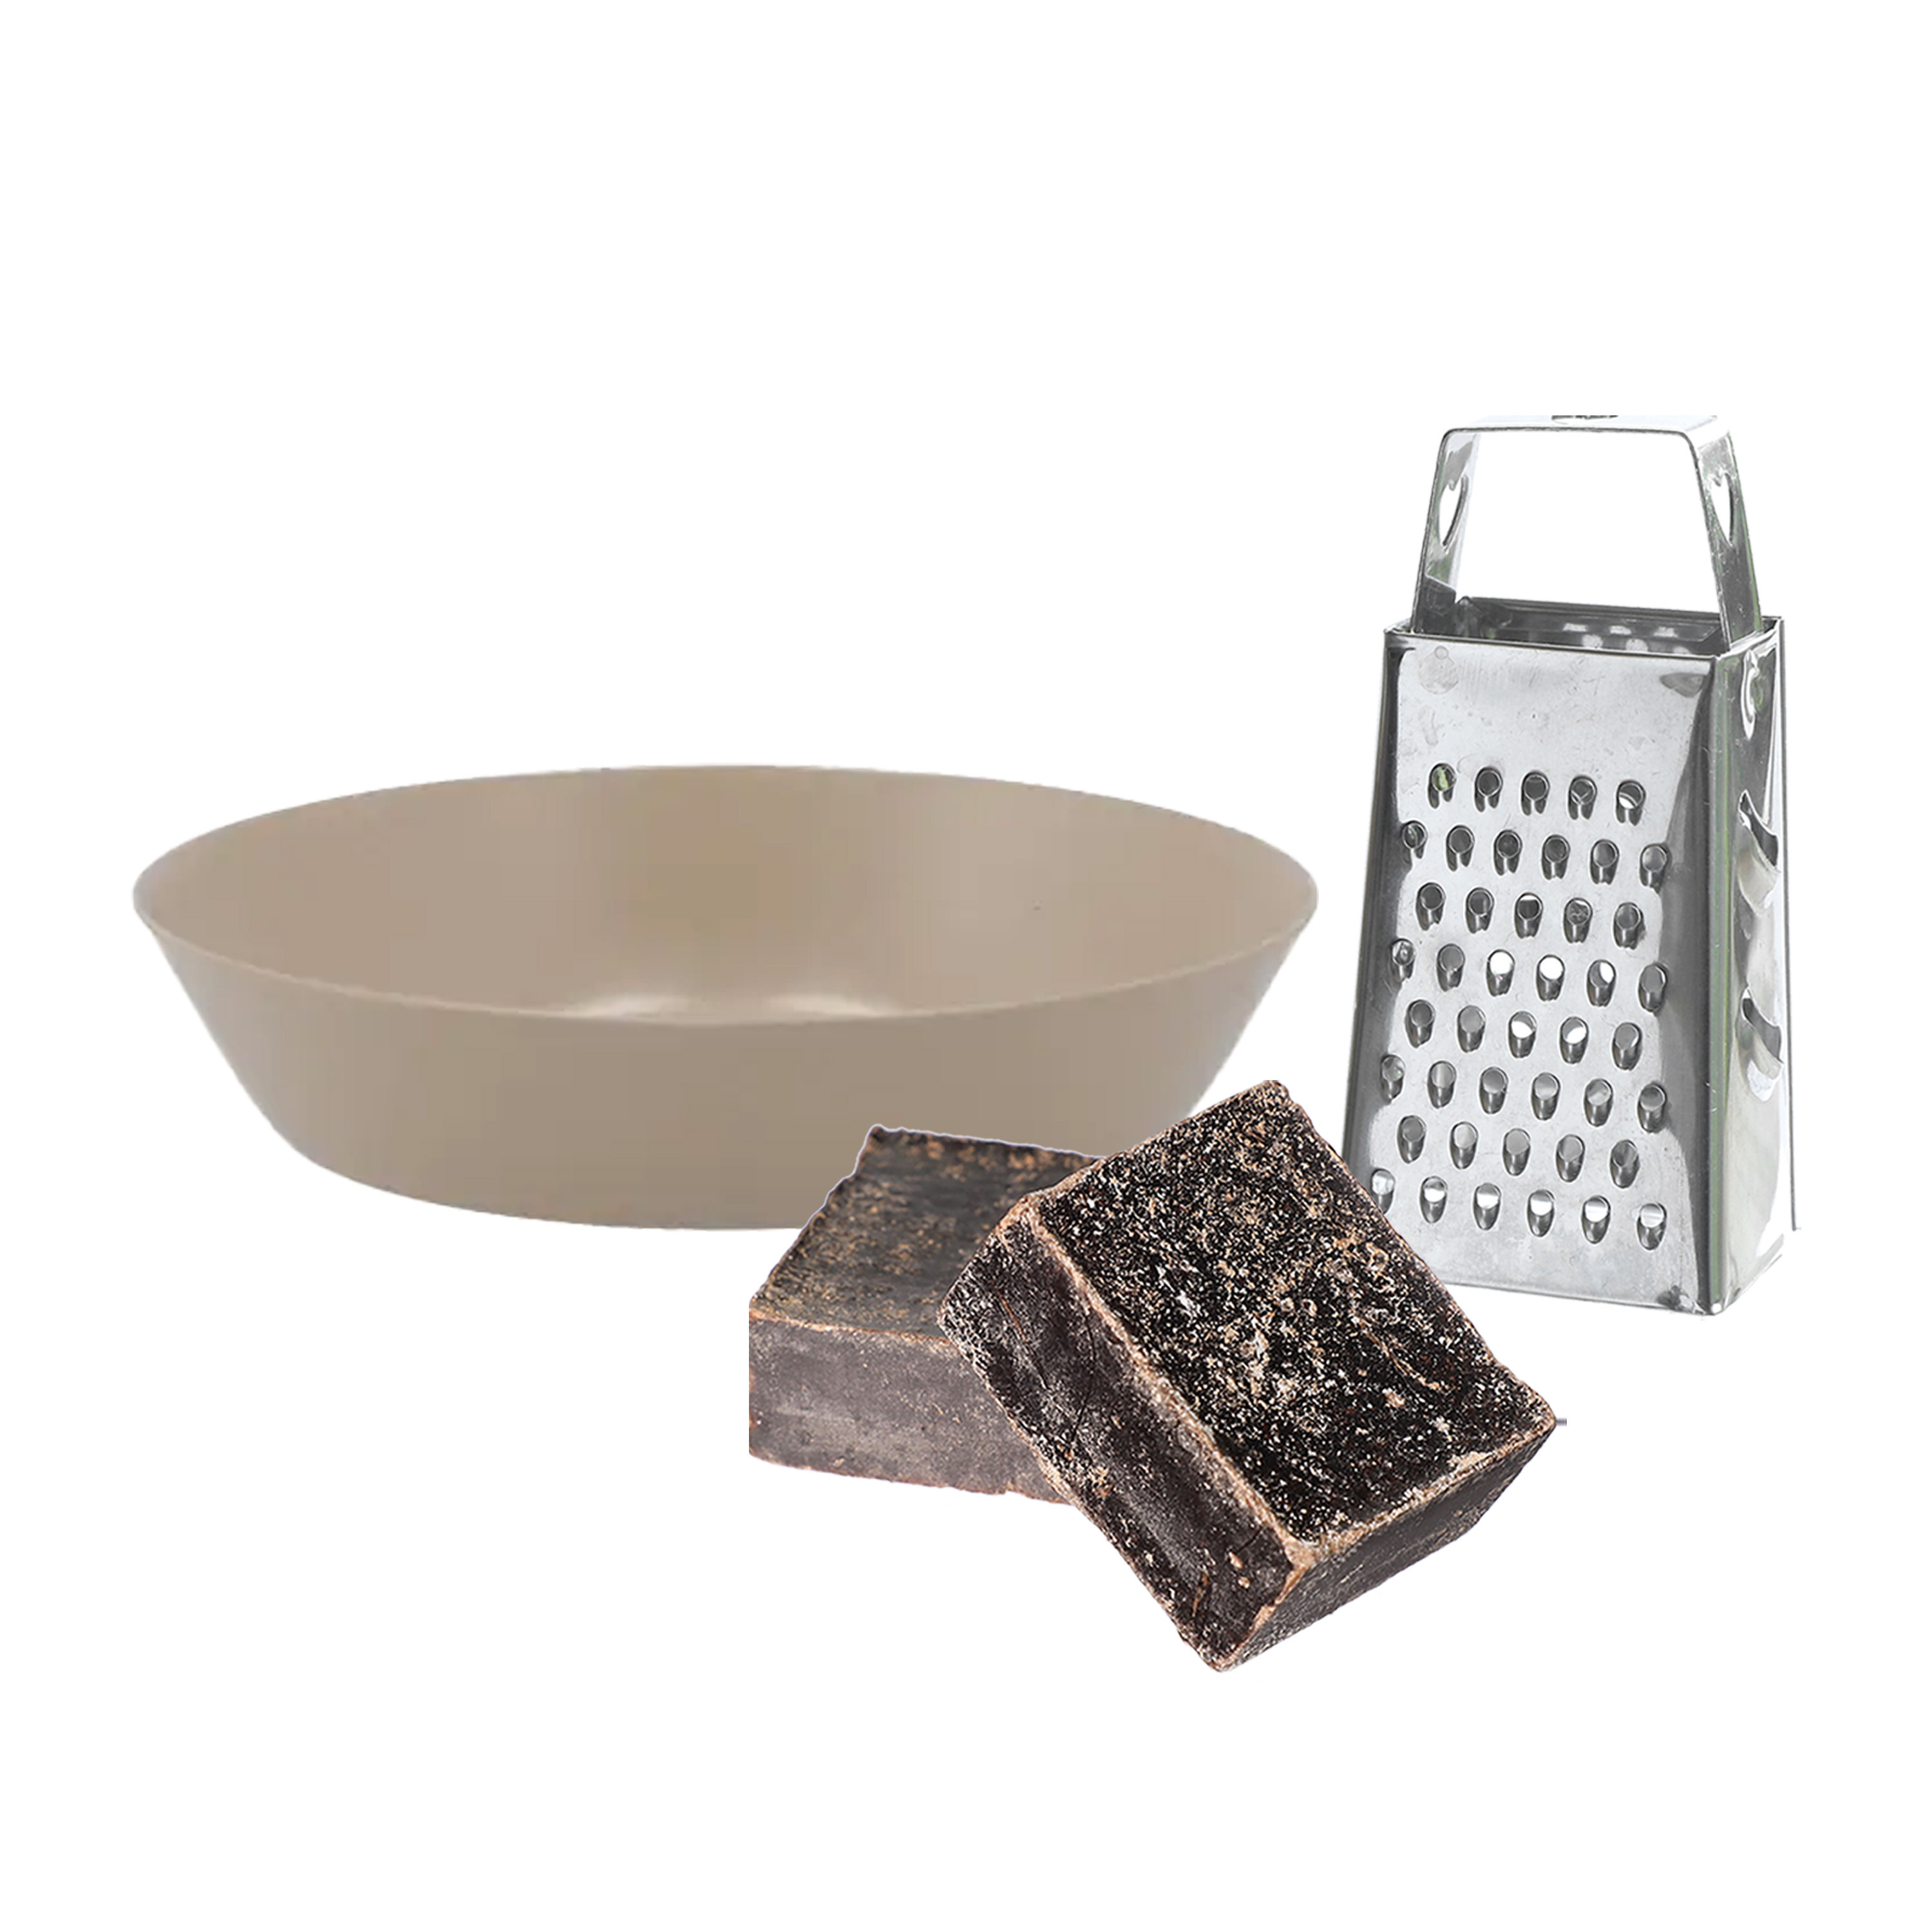 Amberblokjes-geurblokjes cadeauset ylang ylang geur inclusief schaaltje en mini rasp